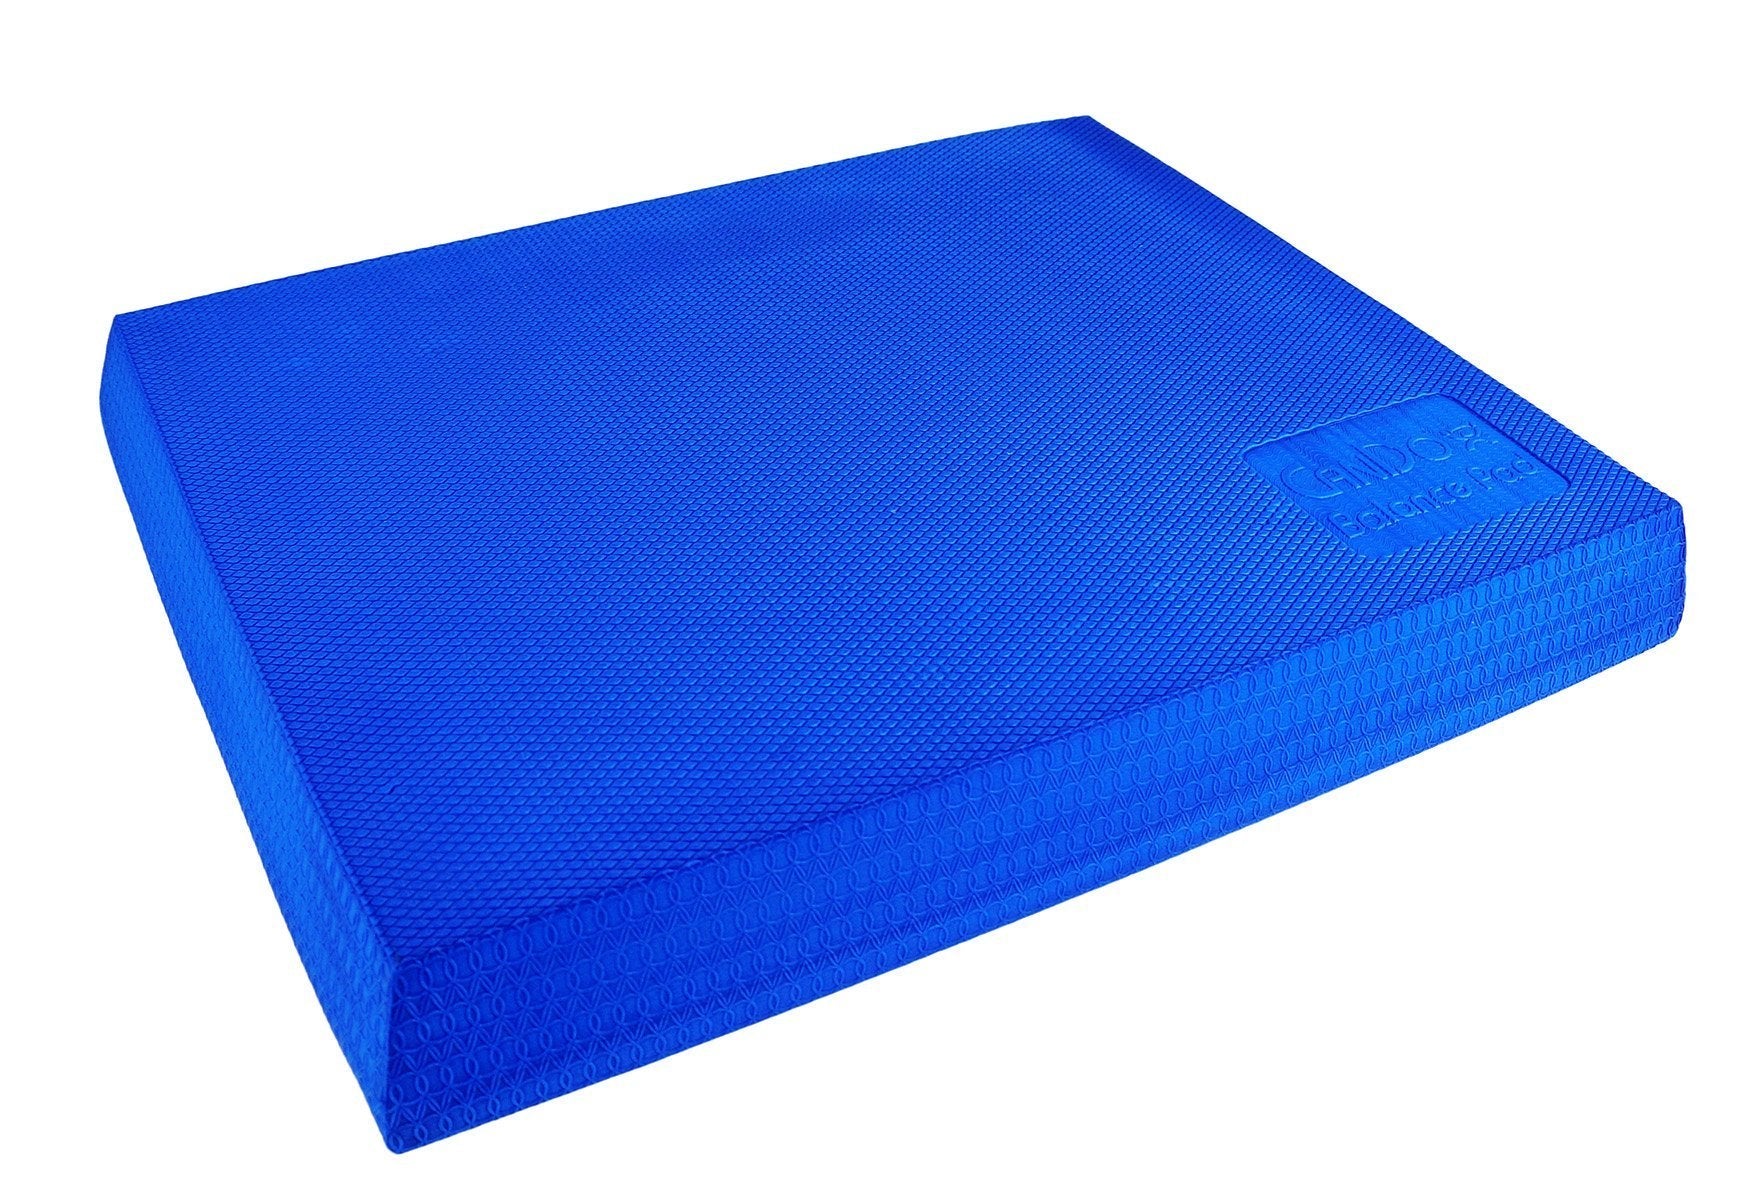 CanDo balance pad, 16 x 20 x 2.5, blue – Gordon Medical